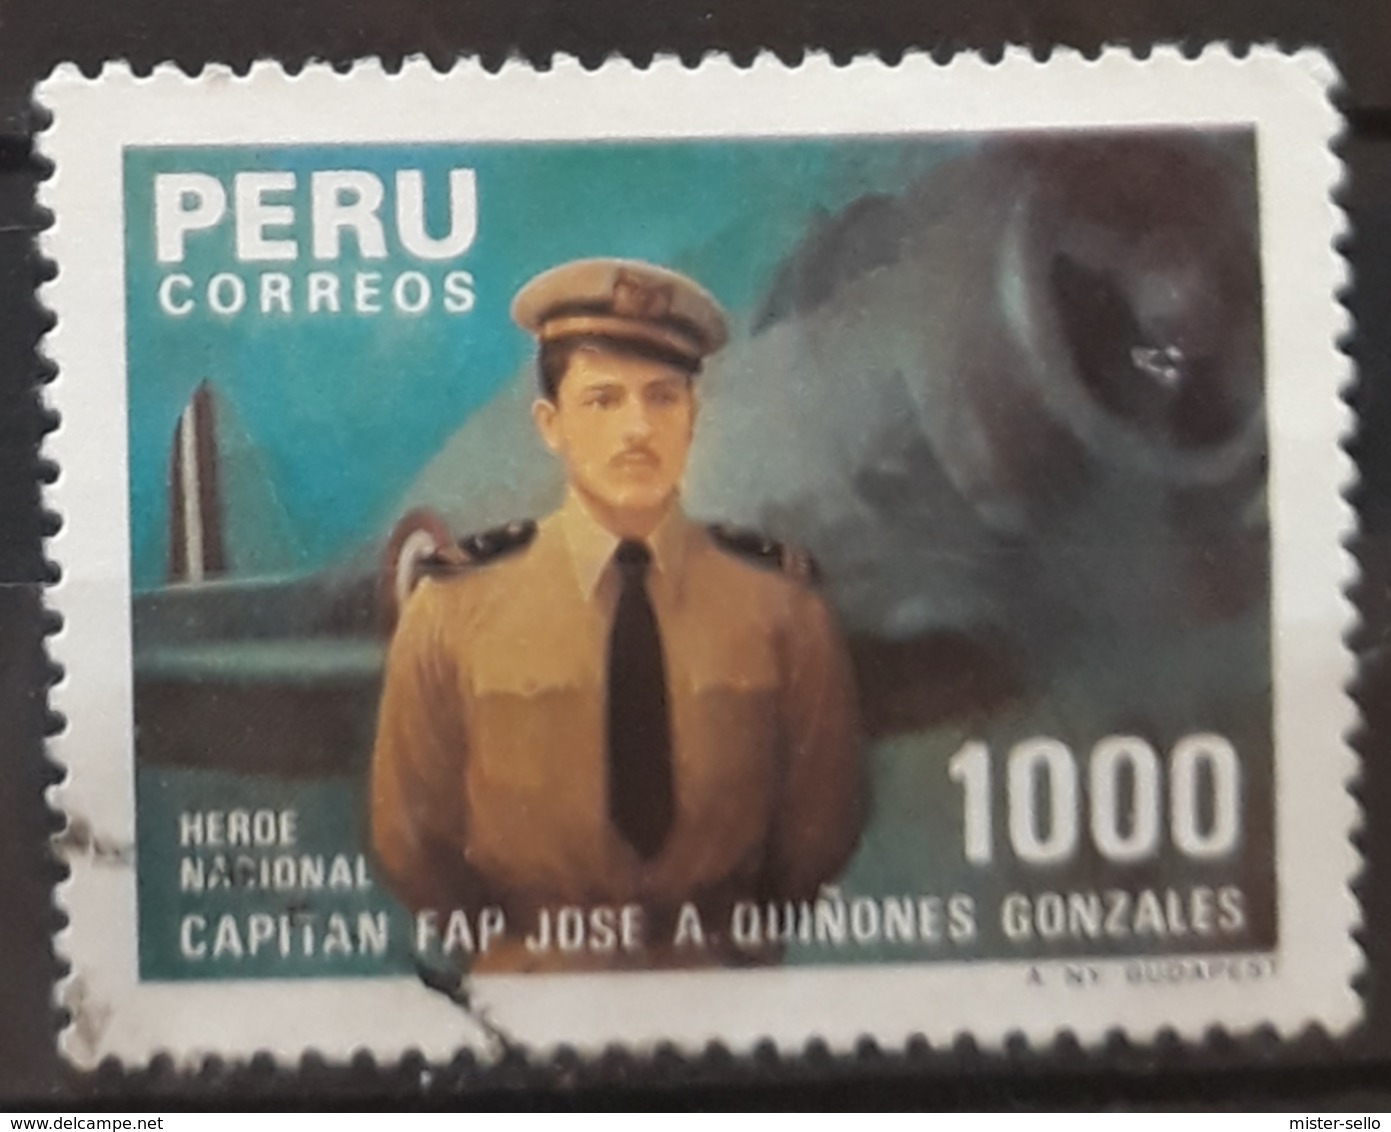 PERU 1985 The 44th Anniversary Of The Death Of Jose Abelardo Quinones Gonzales, Air Force Captain, 1914-19.USADO - USED. - Perú